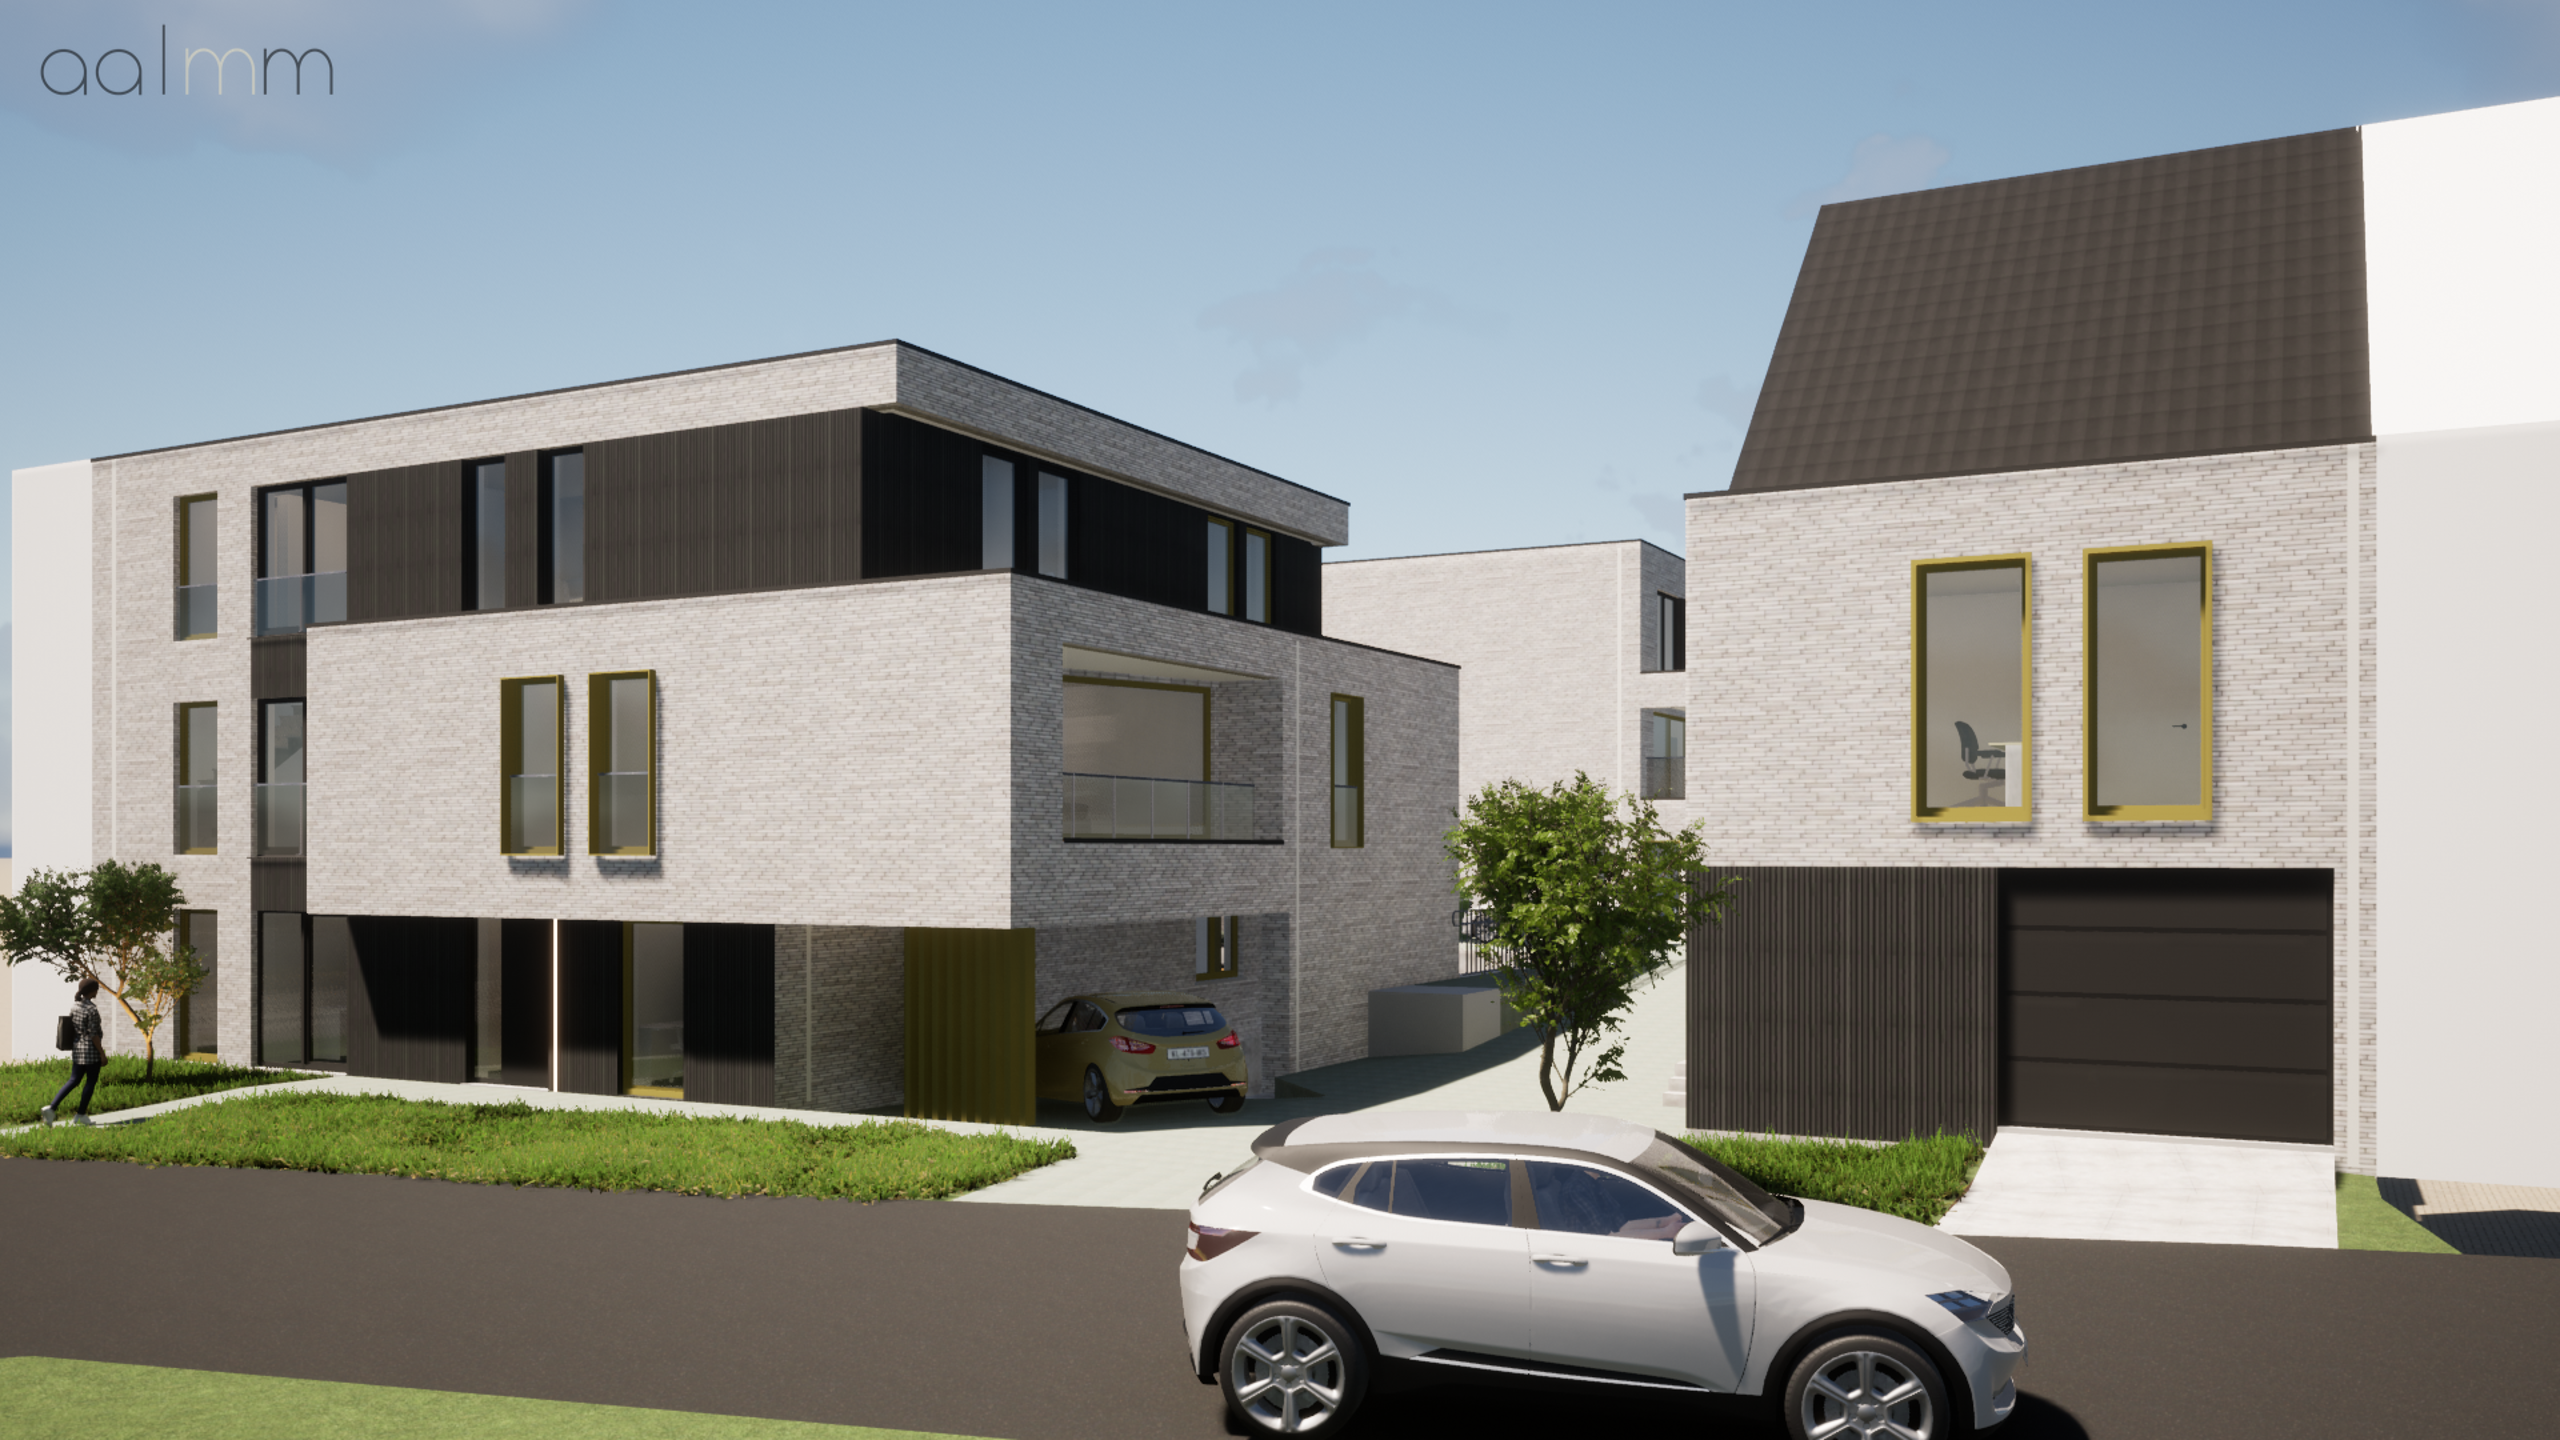 Duplex te  koop in Liedekerke 1770 355000.00€ 2 slaapkamers 106.59m² - Zoekertje 1376768